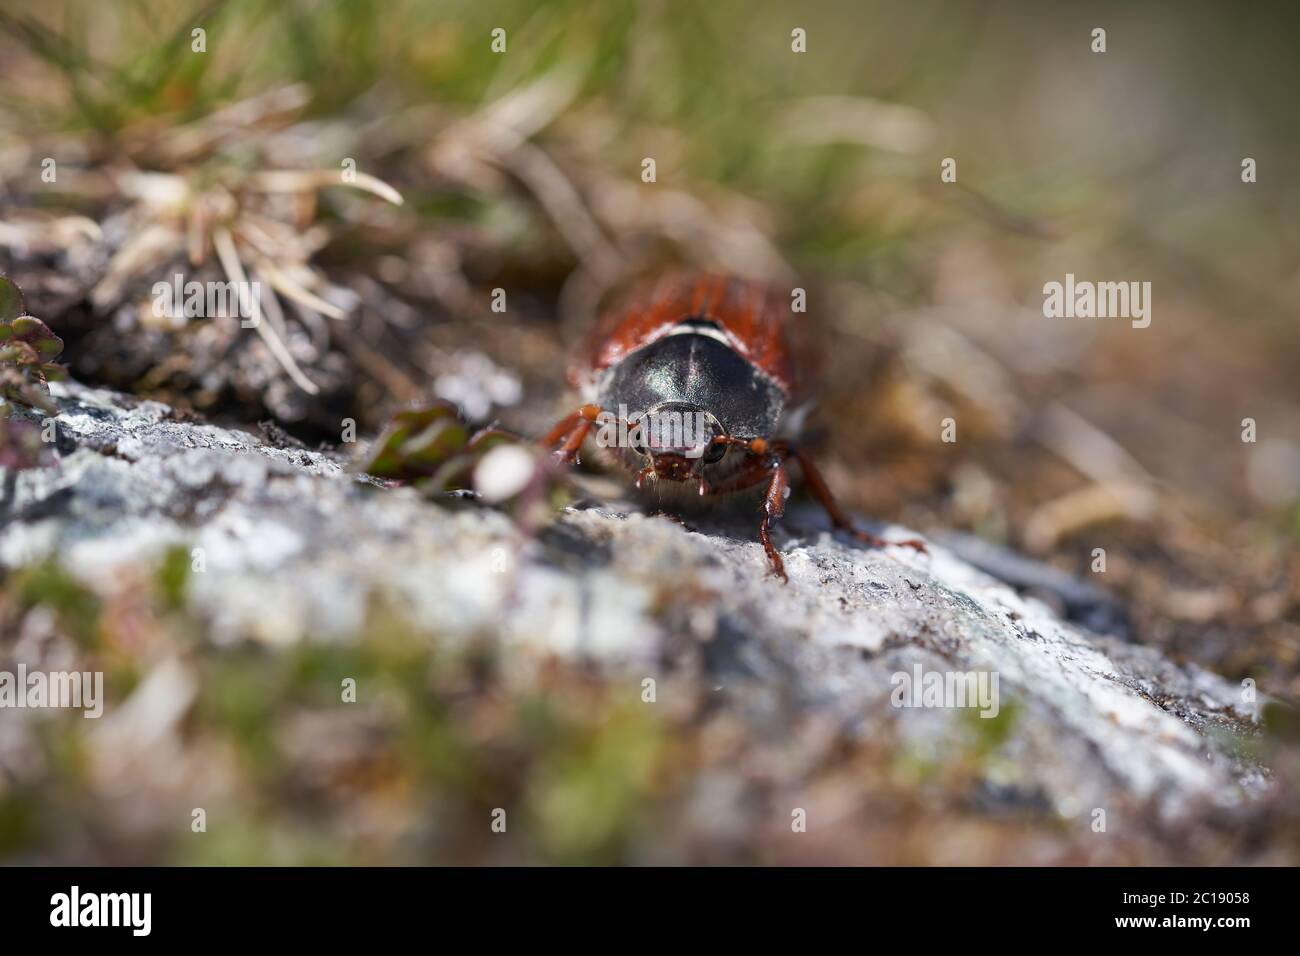 Scarafaggio chiamato anche Maybug o doodlebug europeo Beetle genere melolontha famiglia Scarabaeidae Foto Stock